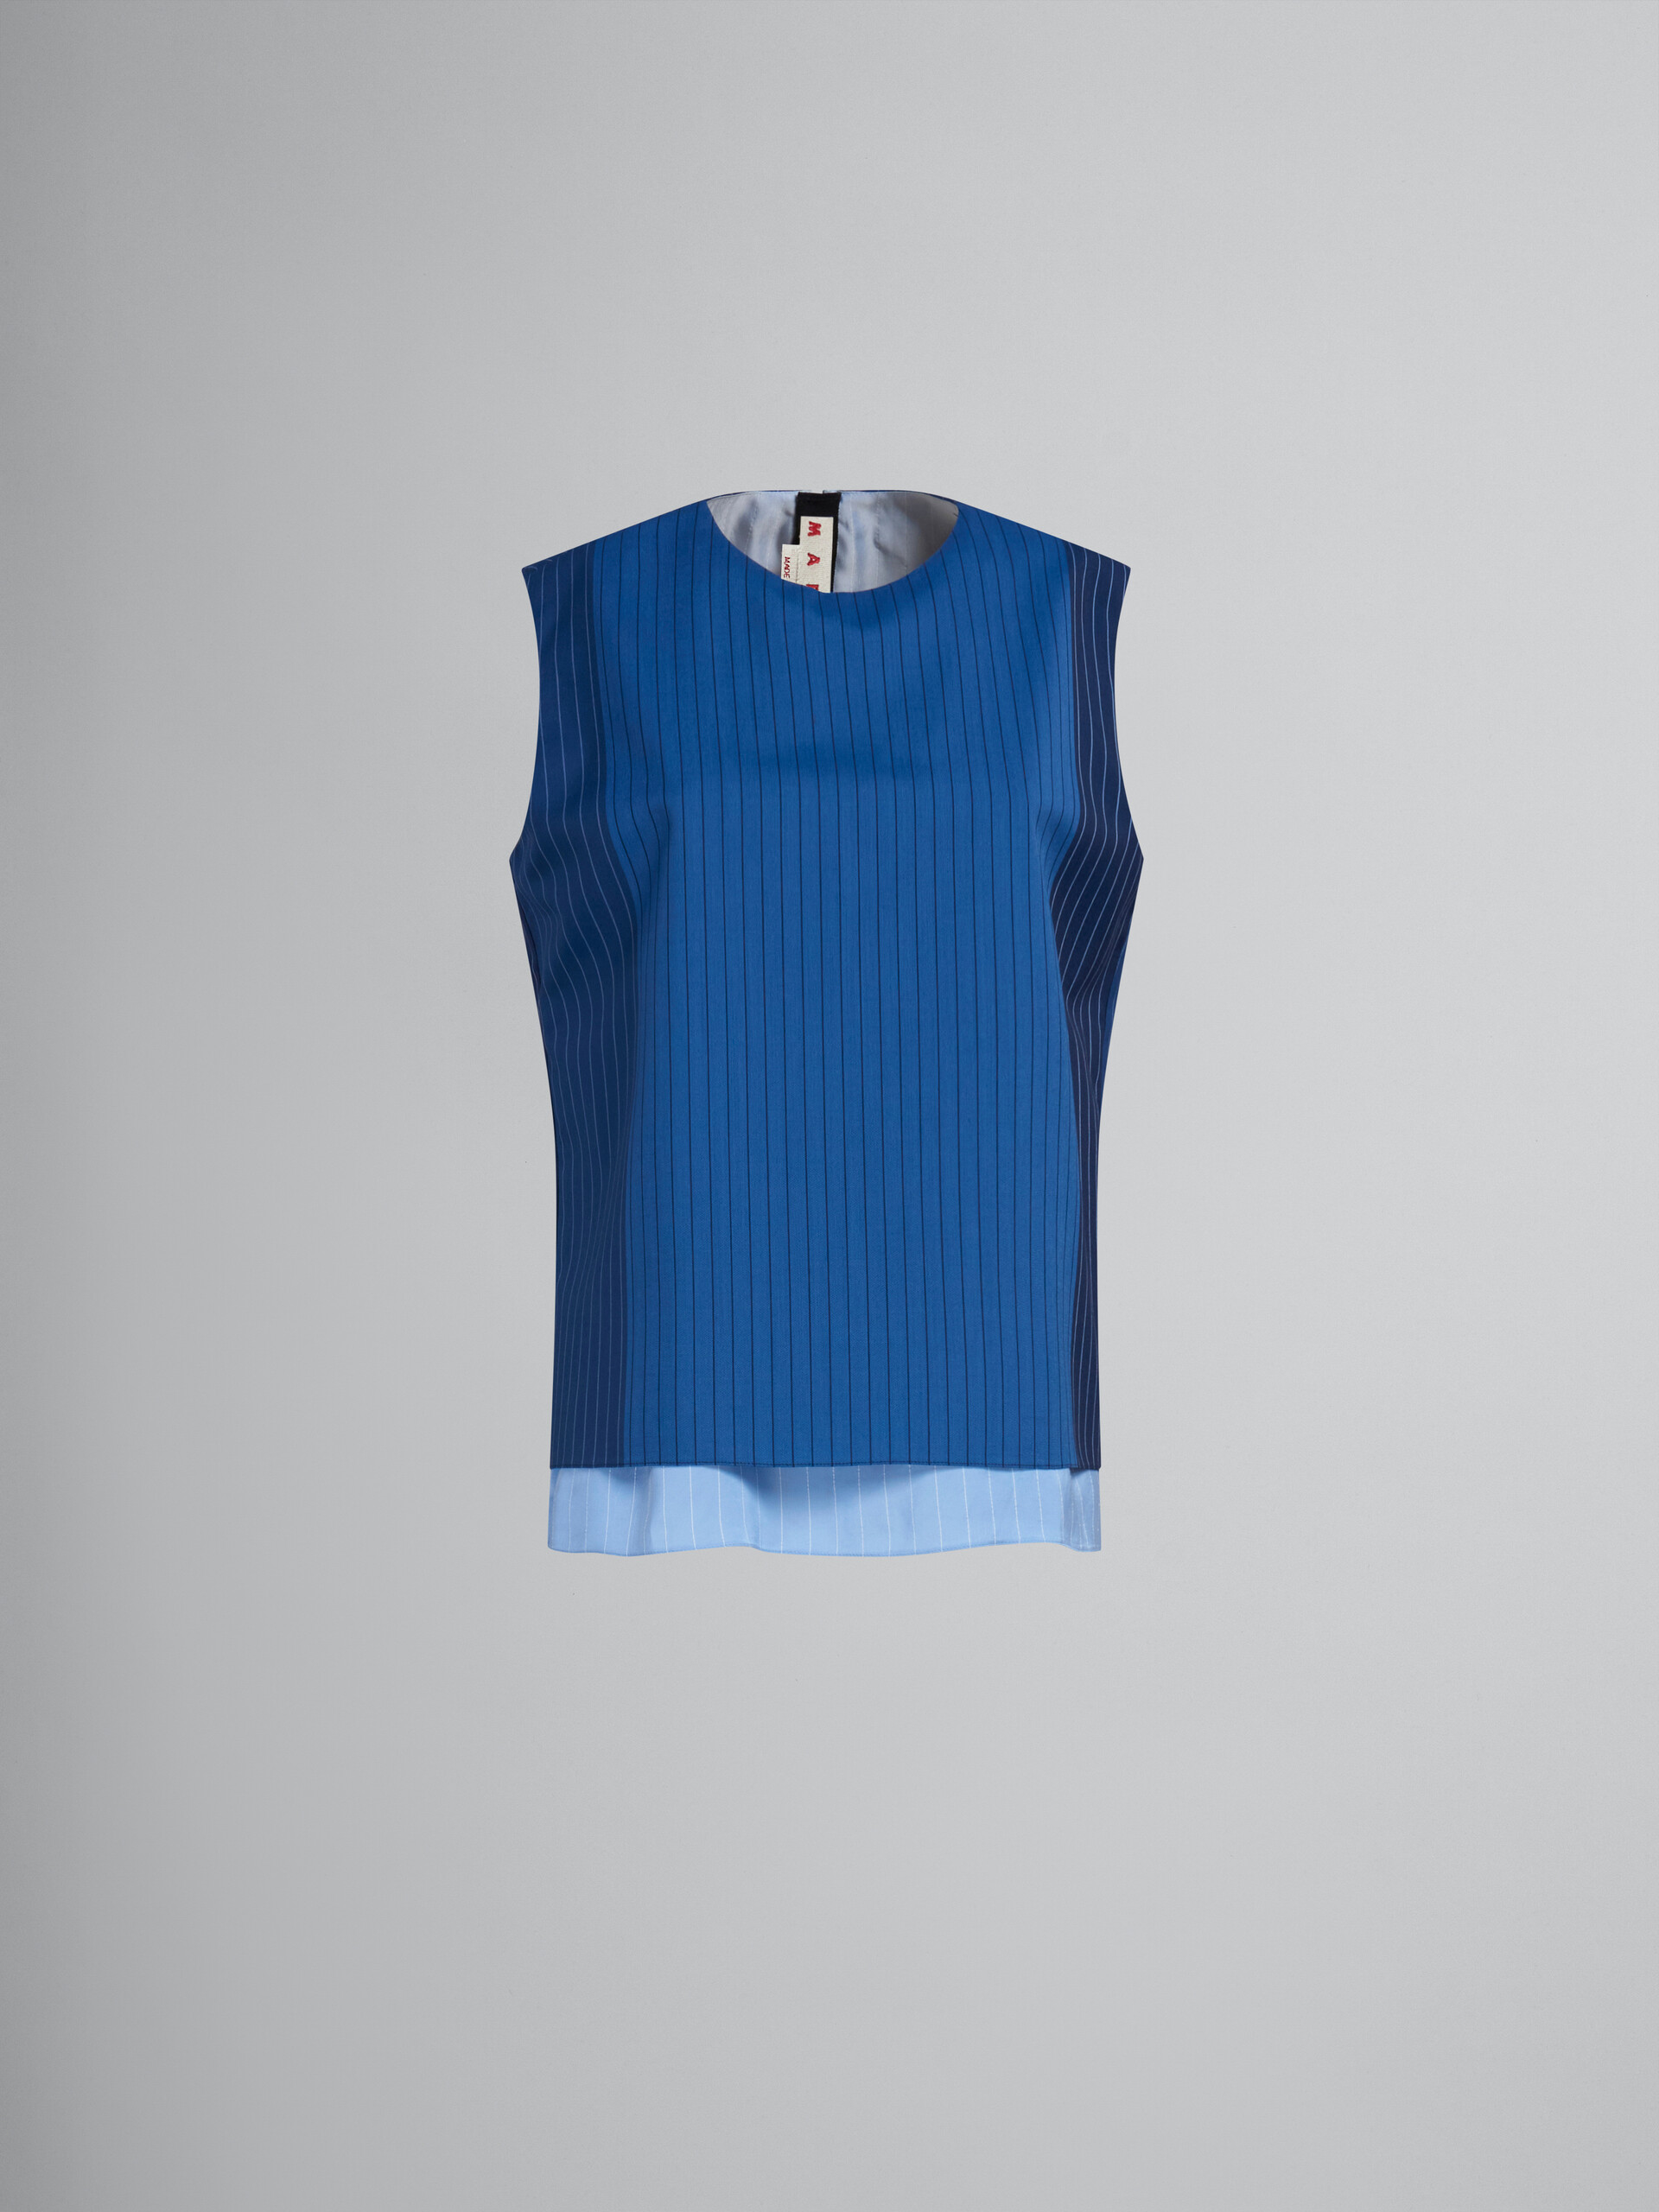 Blaues ärmelloses Top aus Wolle mit Nadelstreifen in Dégradé-Optik - Hemden - Image 1